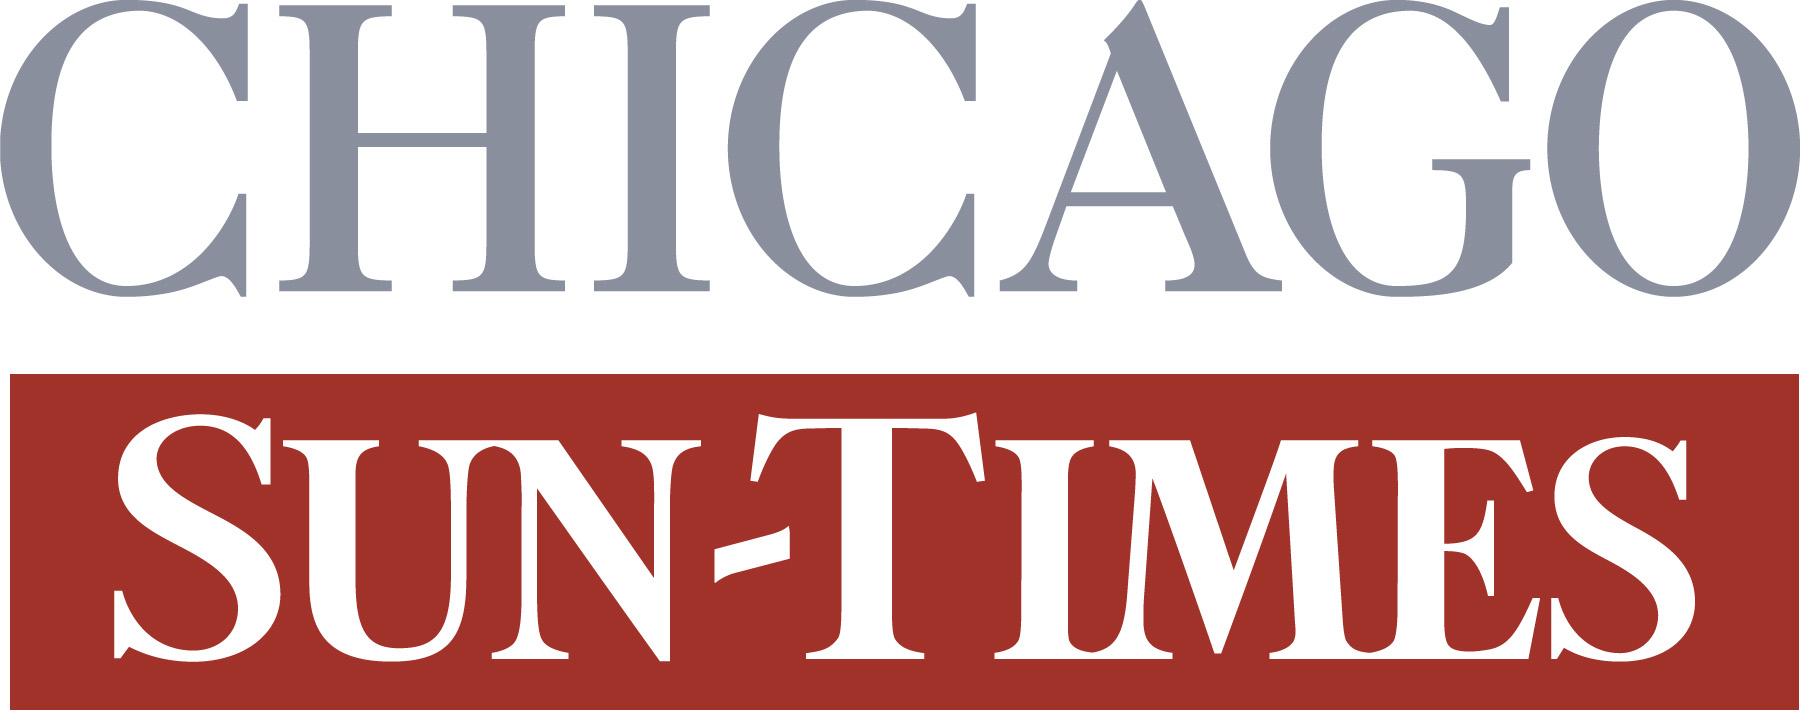 Chicago-Sun-Times-Logo.jpg